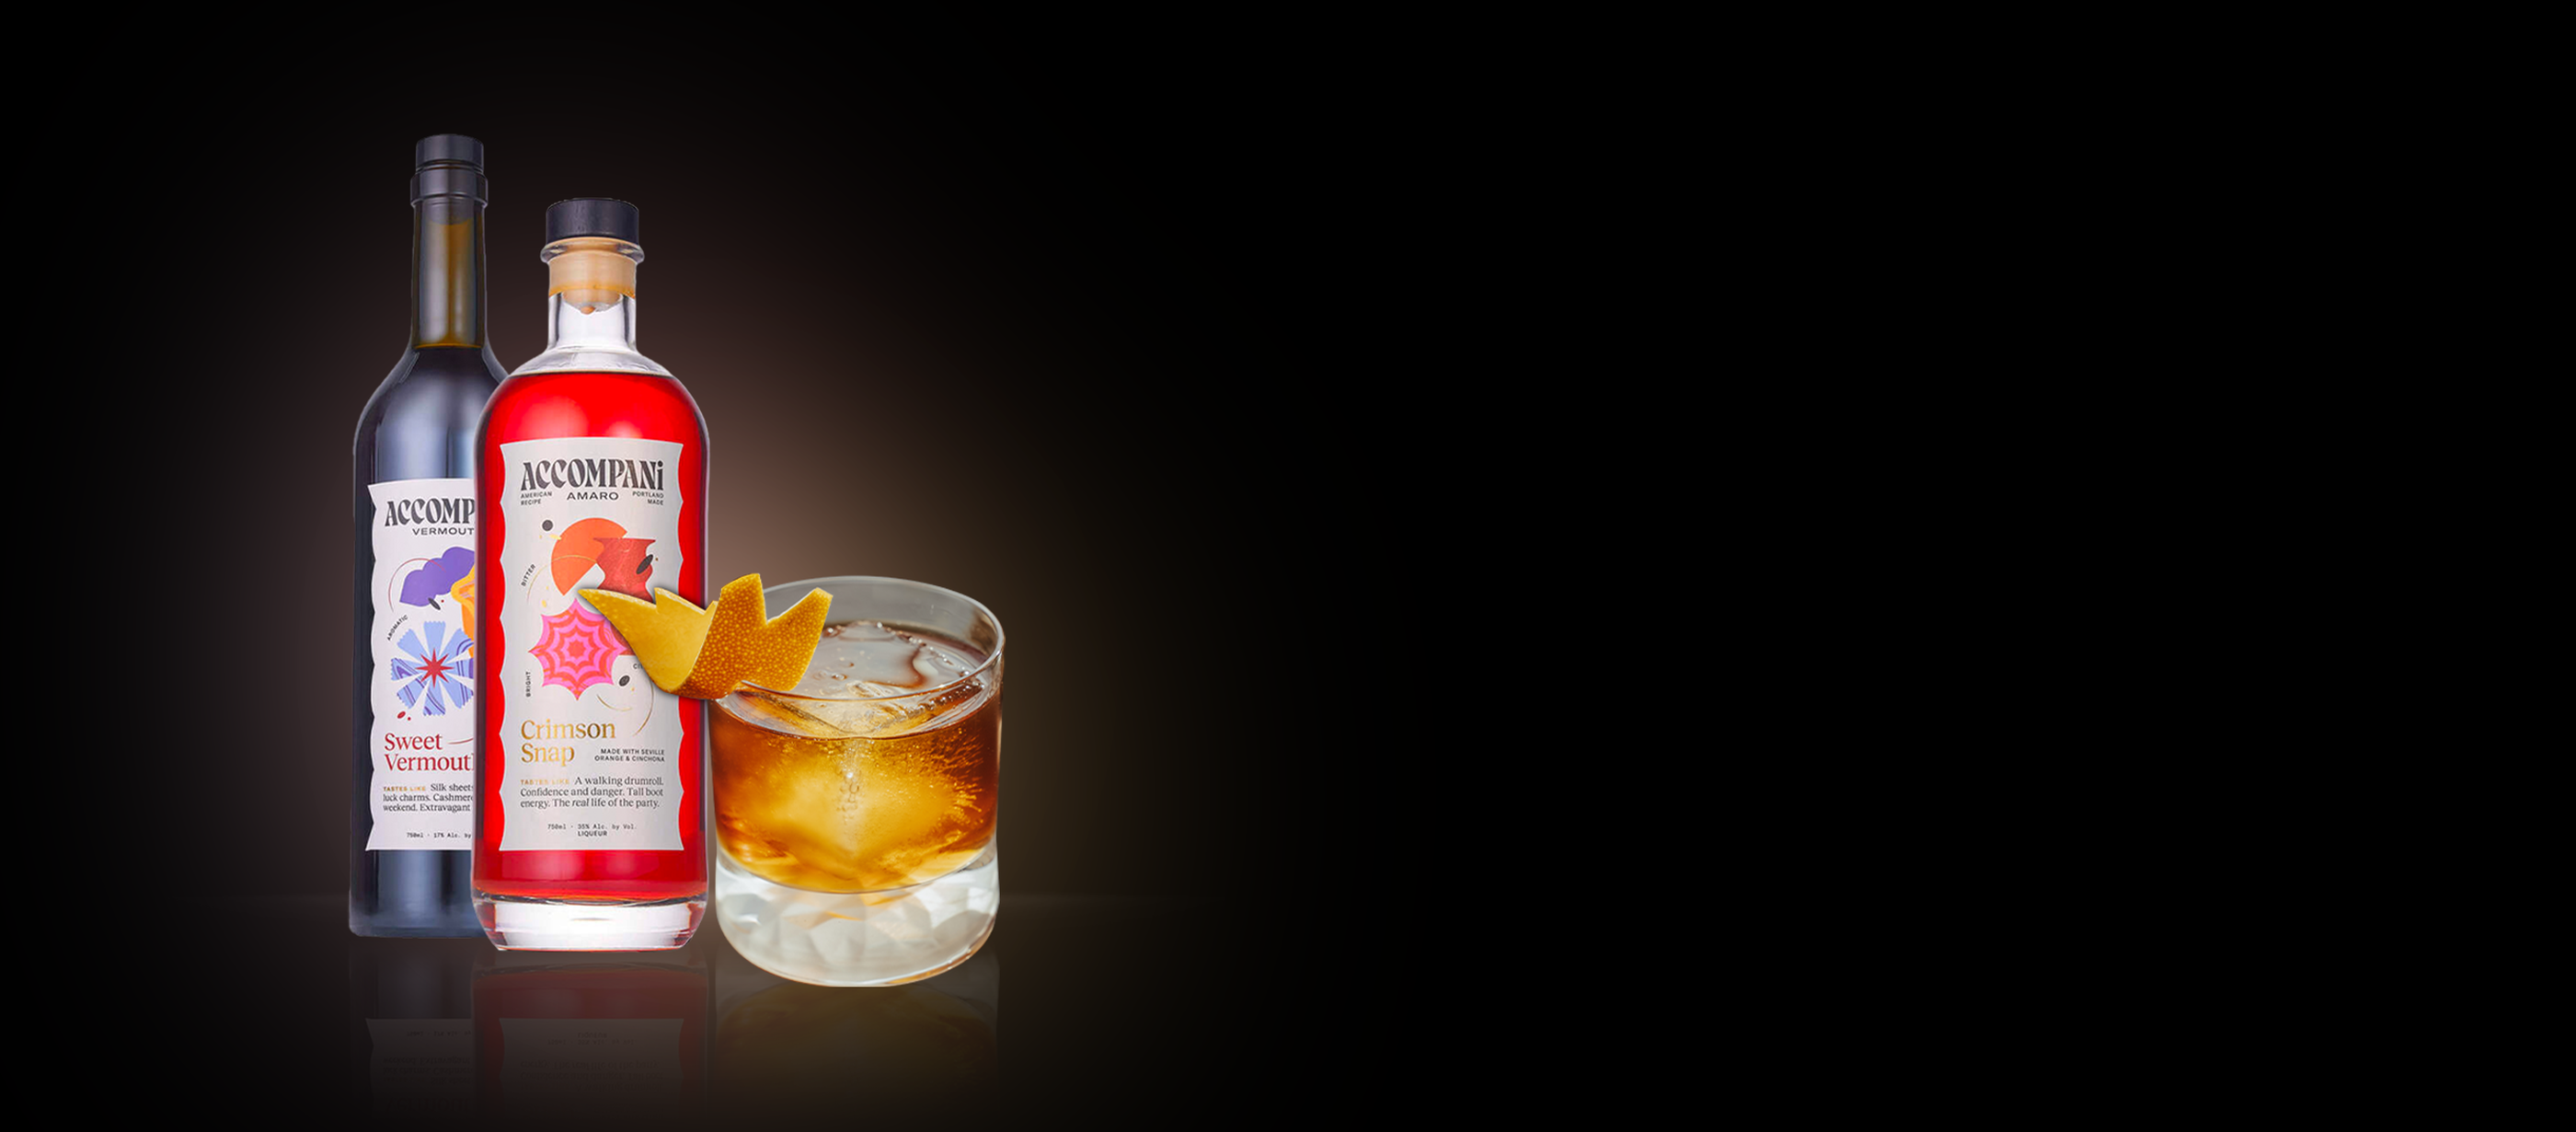 The Accompani Boulevardier Cocktail